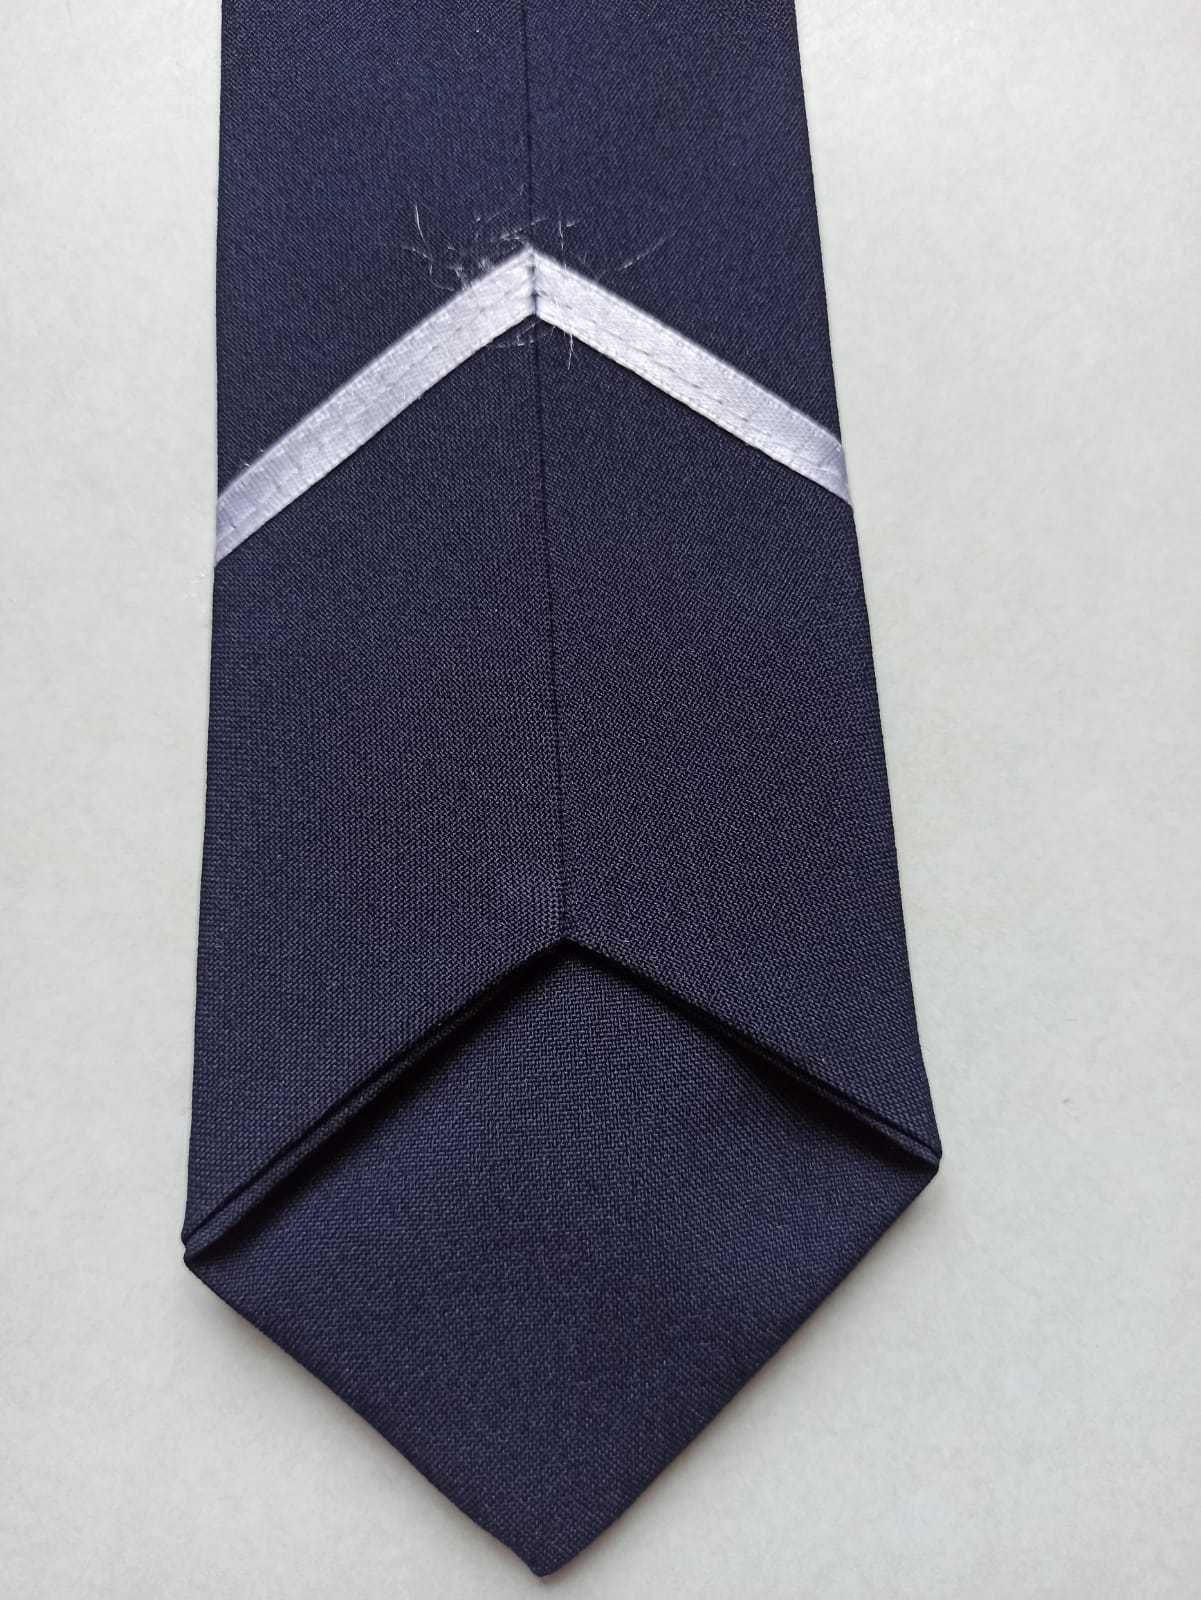 krawat marynarski na gumce